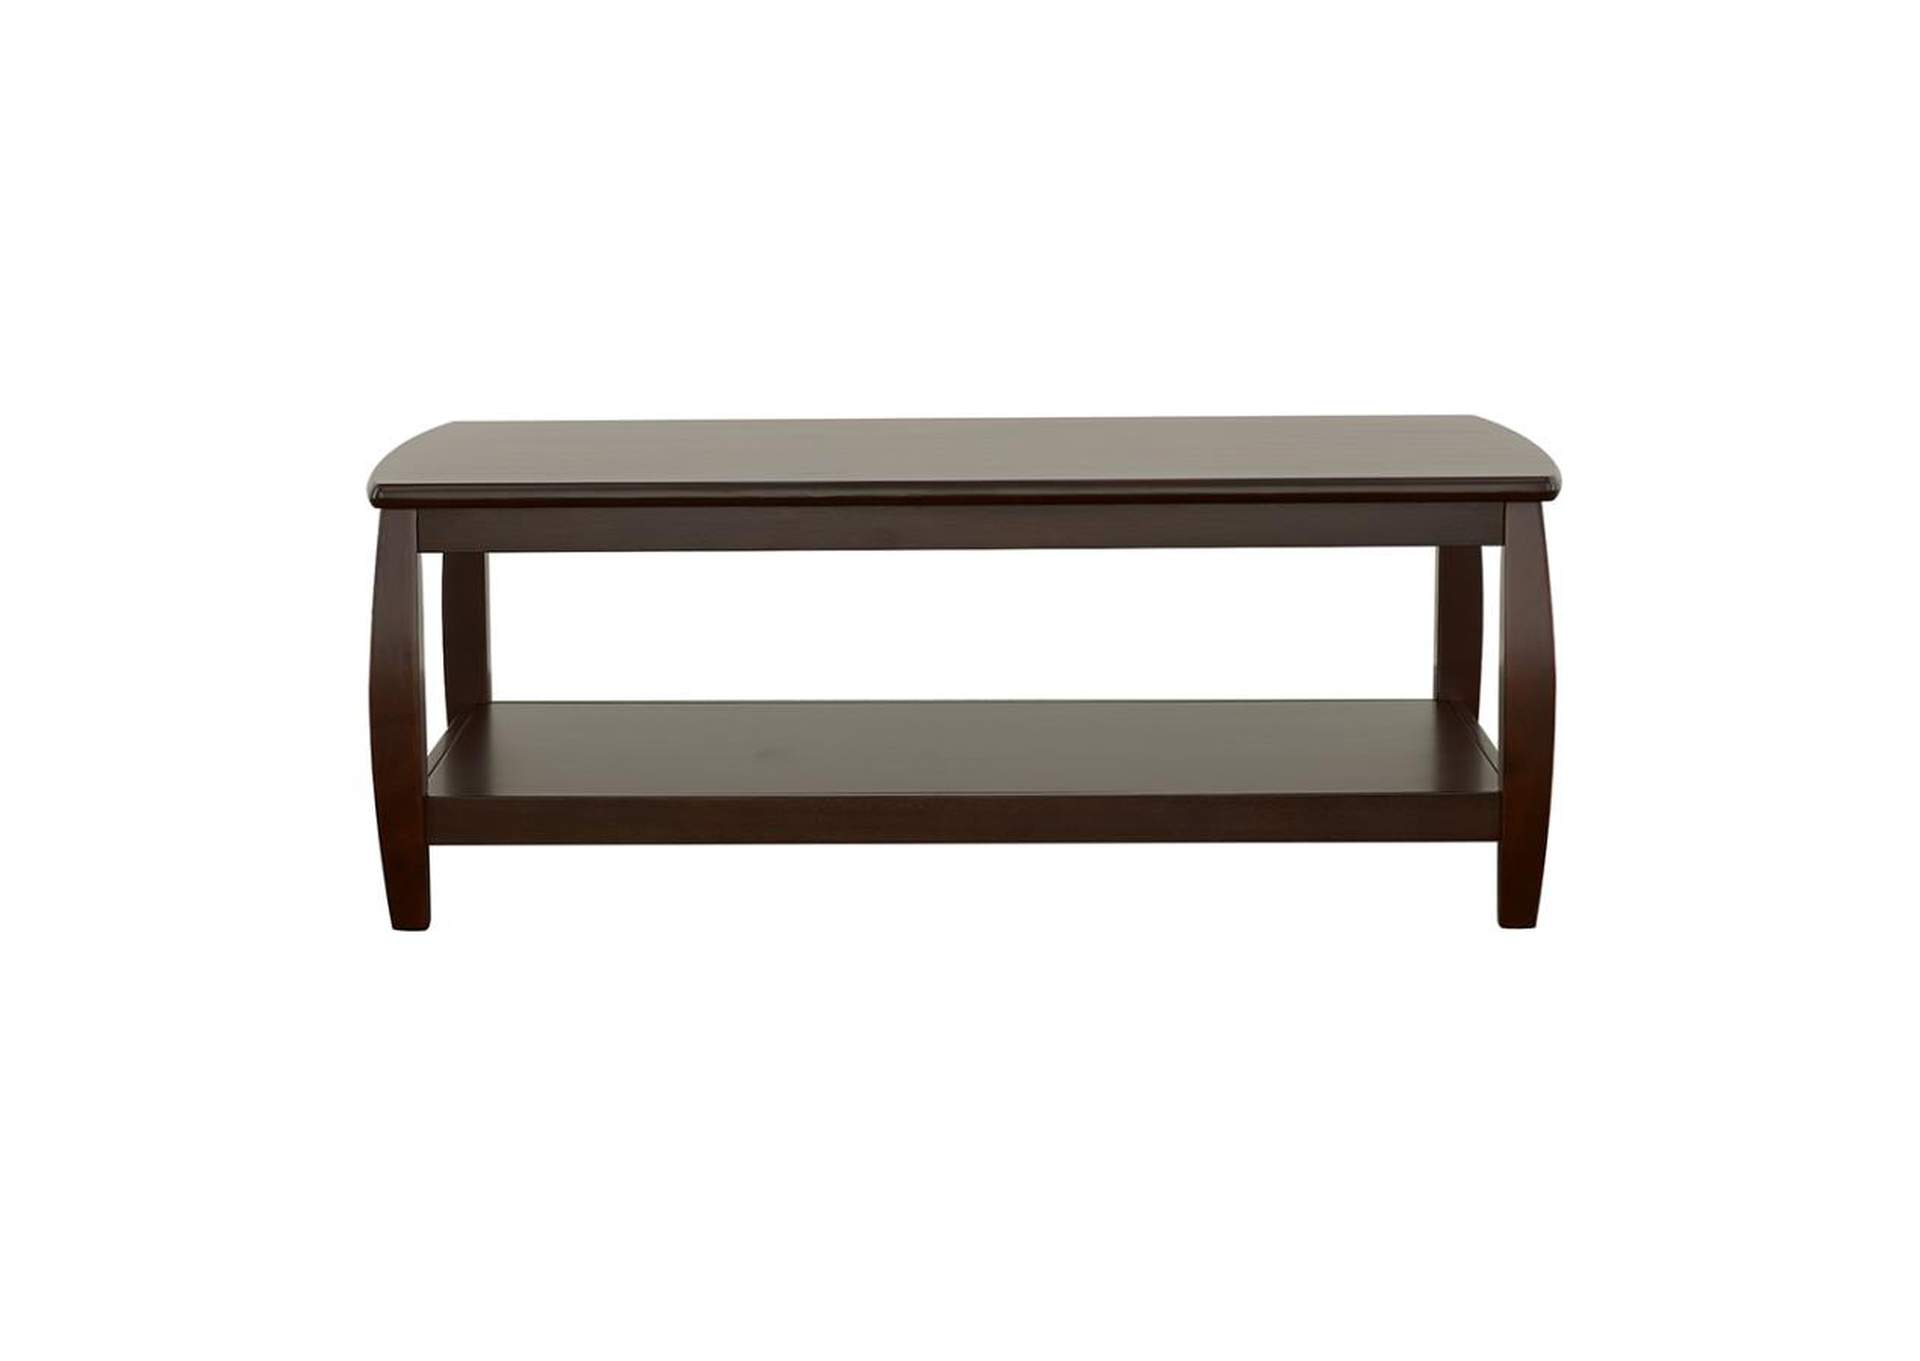 Dixon Rectangular Coffee Table with Lower Shelf Espresso,Coaster Furniture